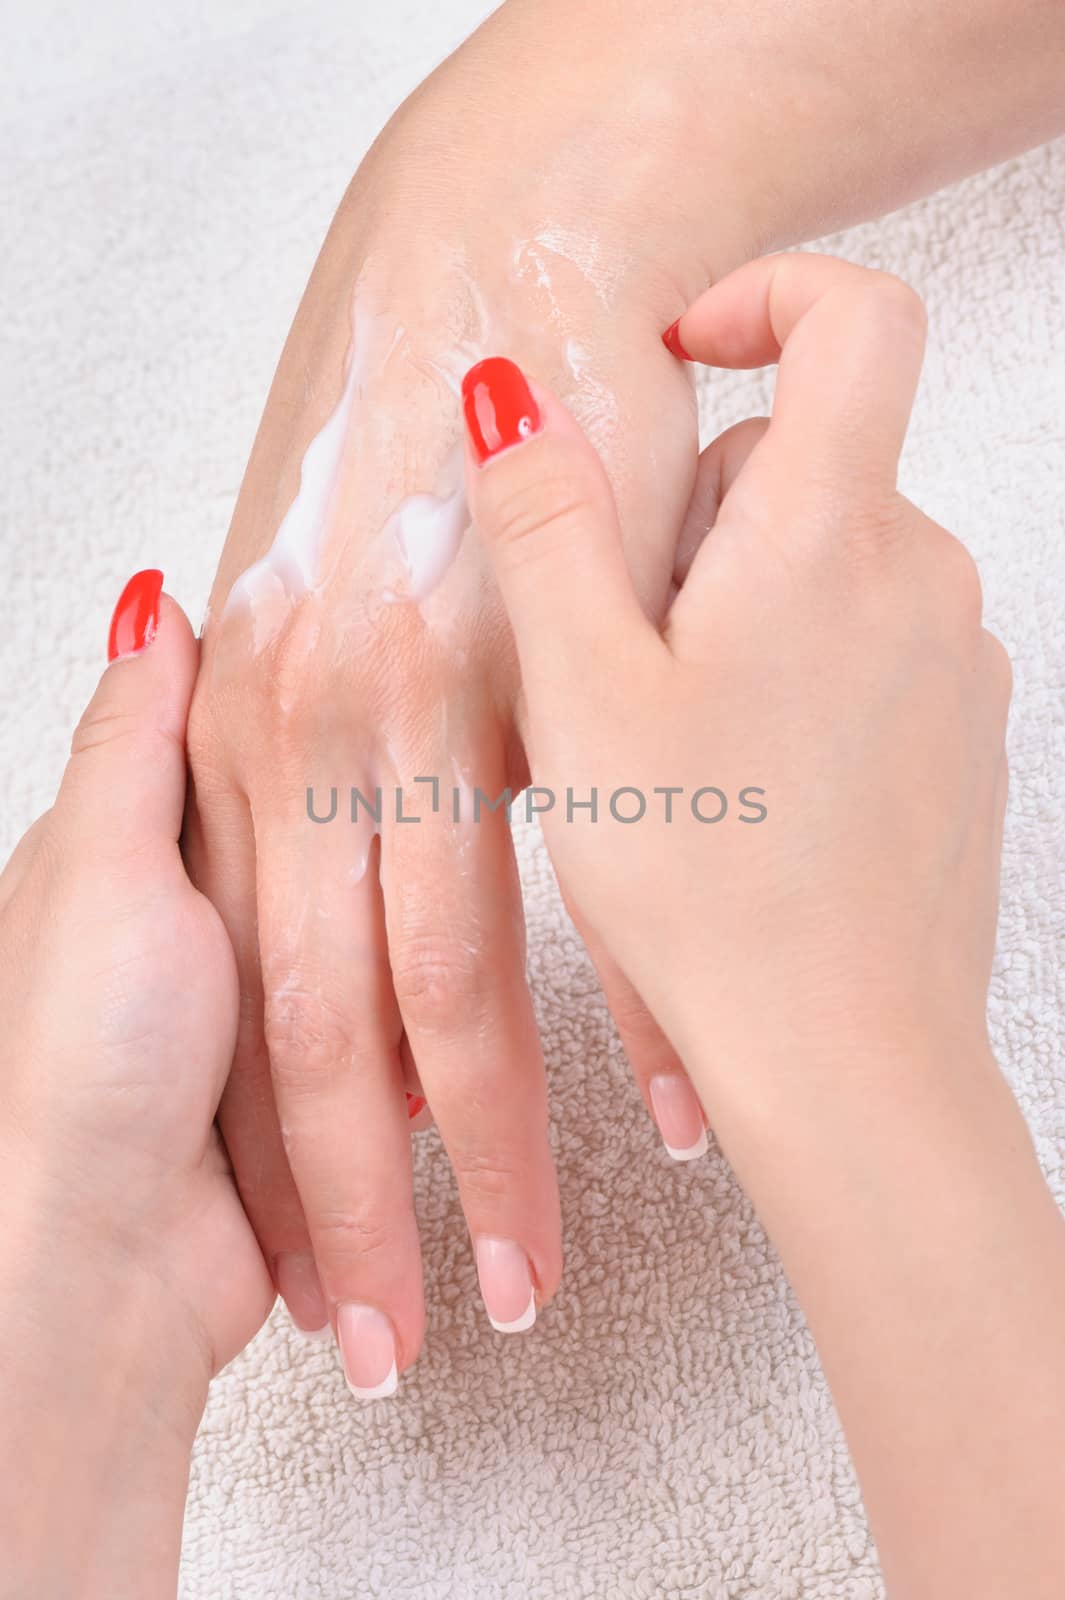 beauty salon, manicure and hands skin care - cream applying